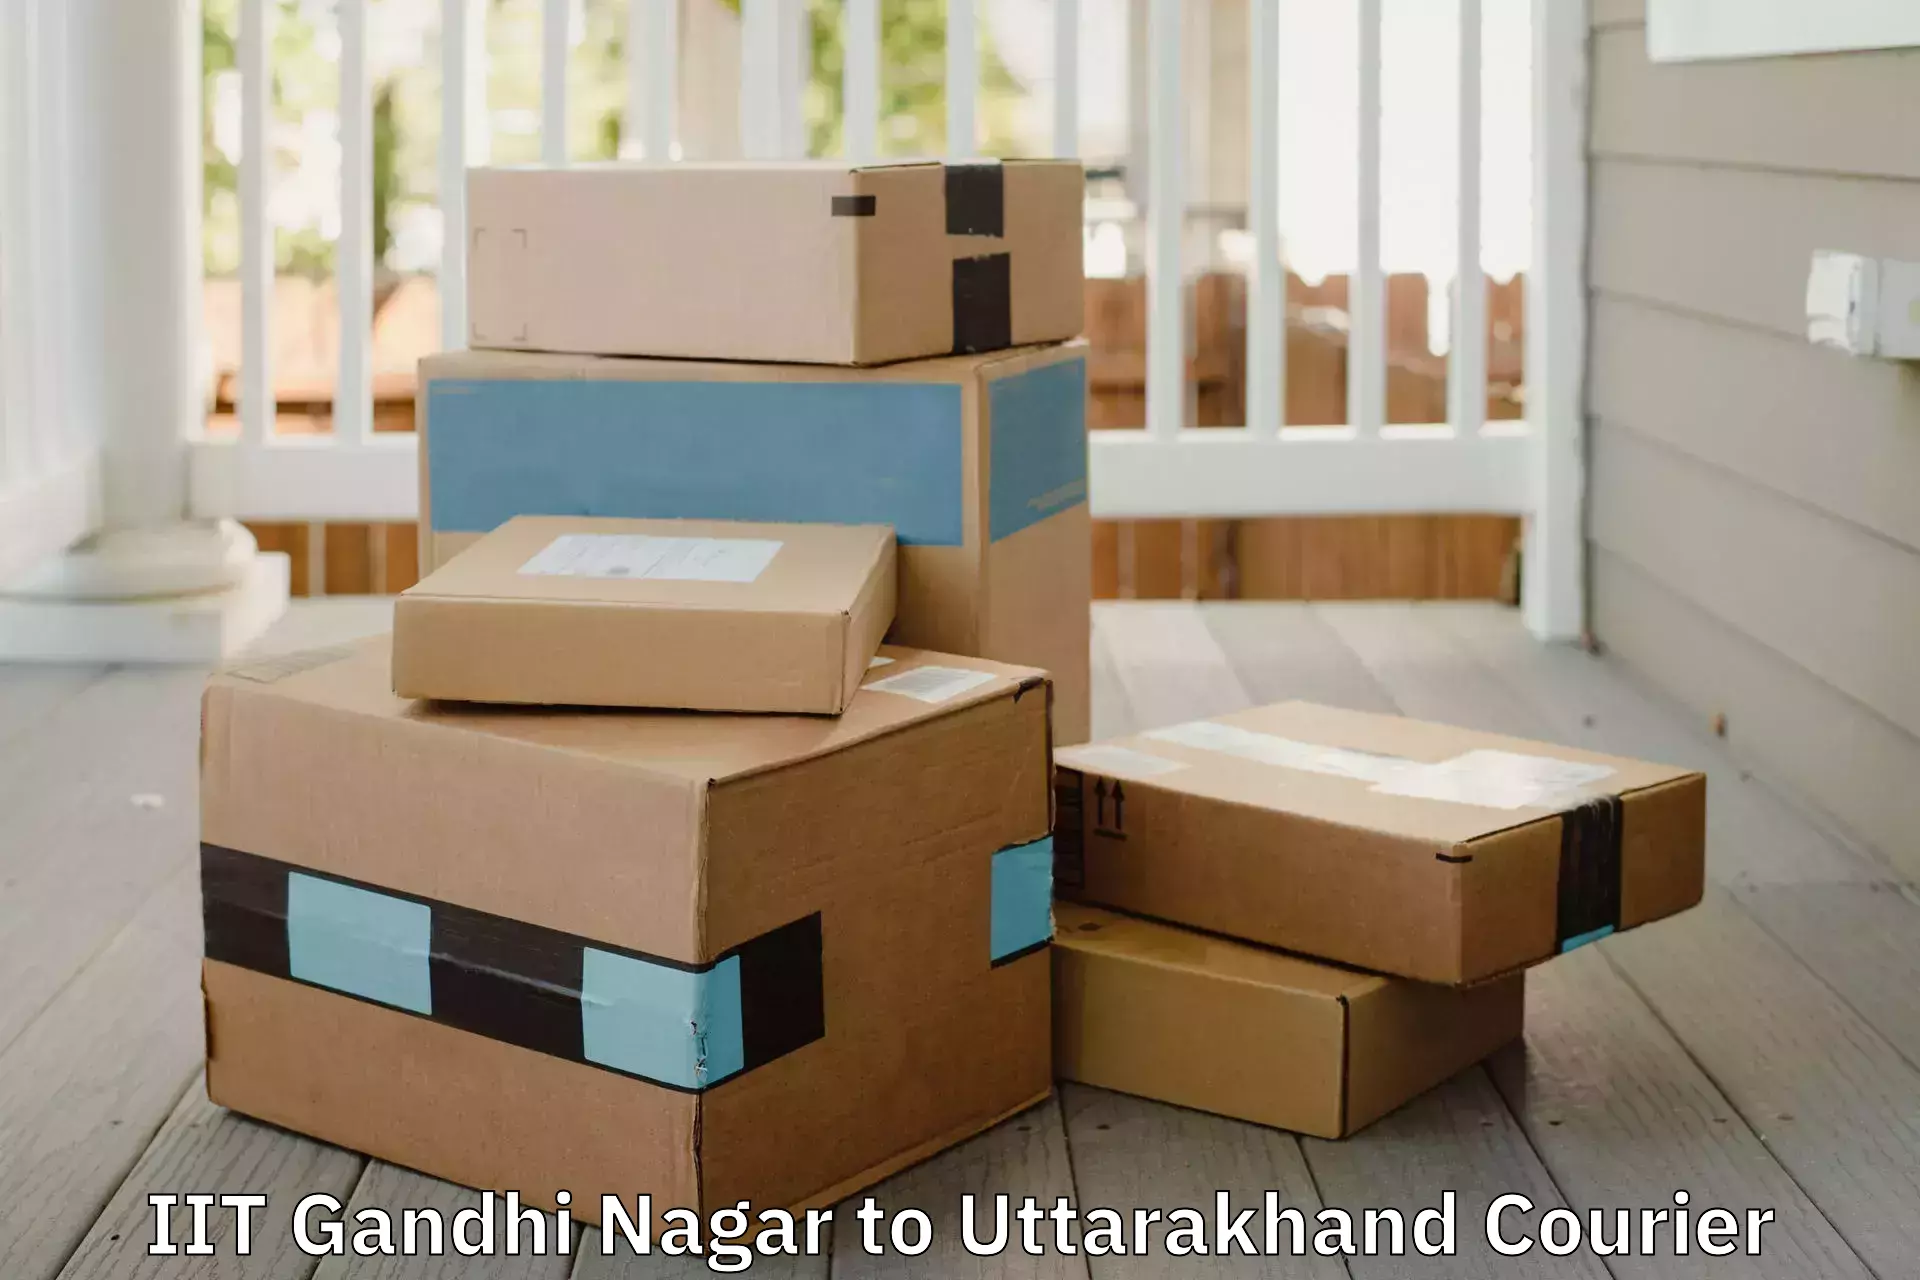 Quality relocation assistance IIT Gandhi Nagar to Roorkee